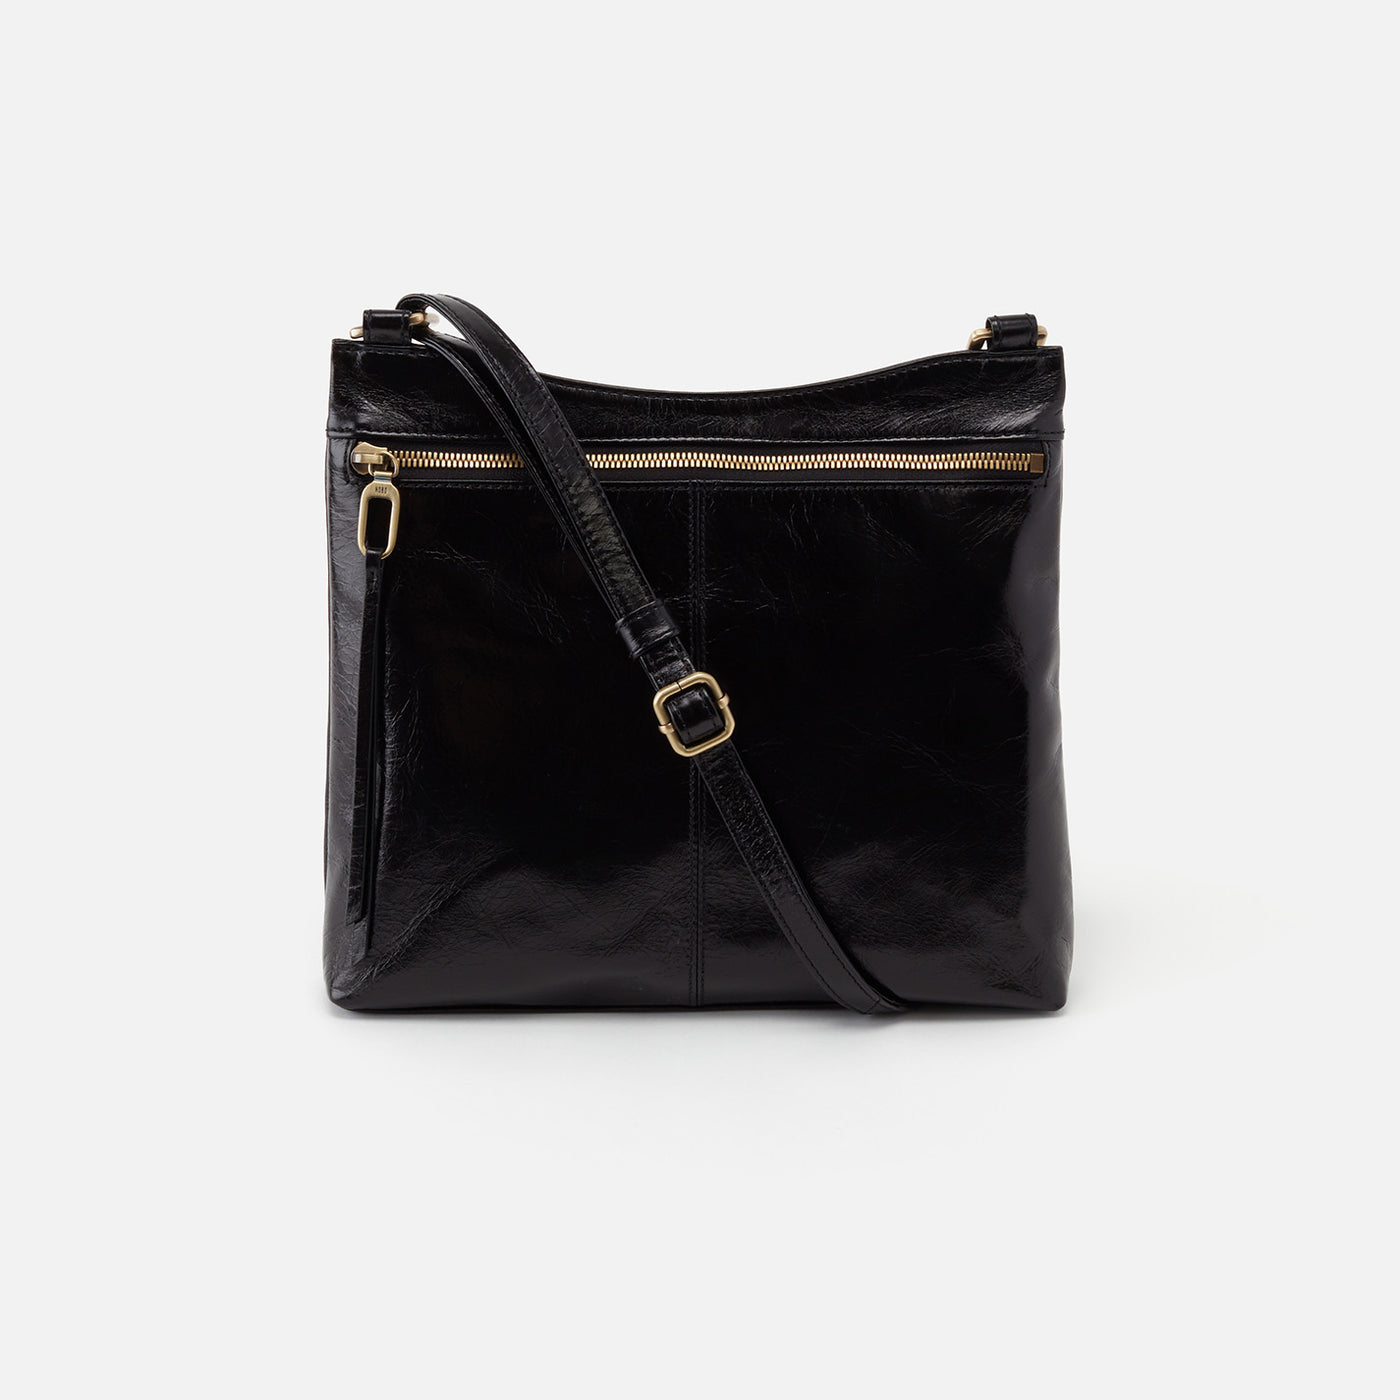 Crossbody Bags for Women Leather Cross Body Purses Cute Design Handbags  Shoulder Bag Medium Size, Black